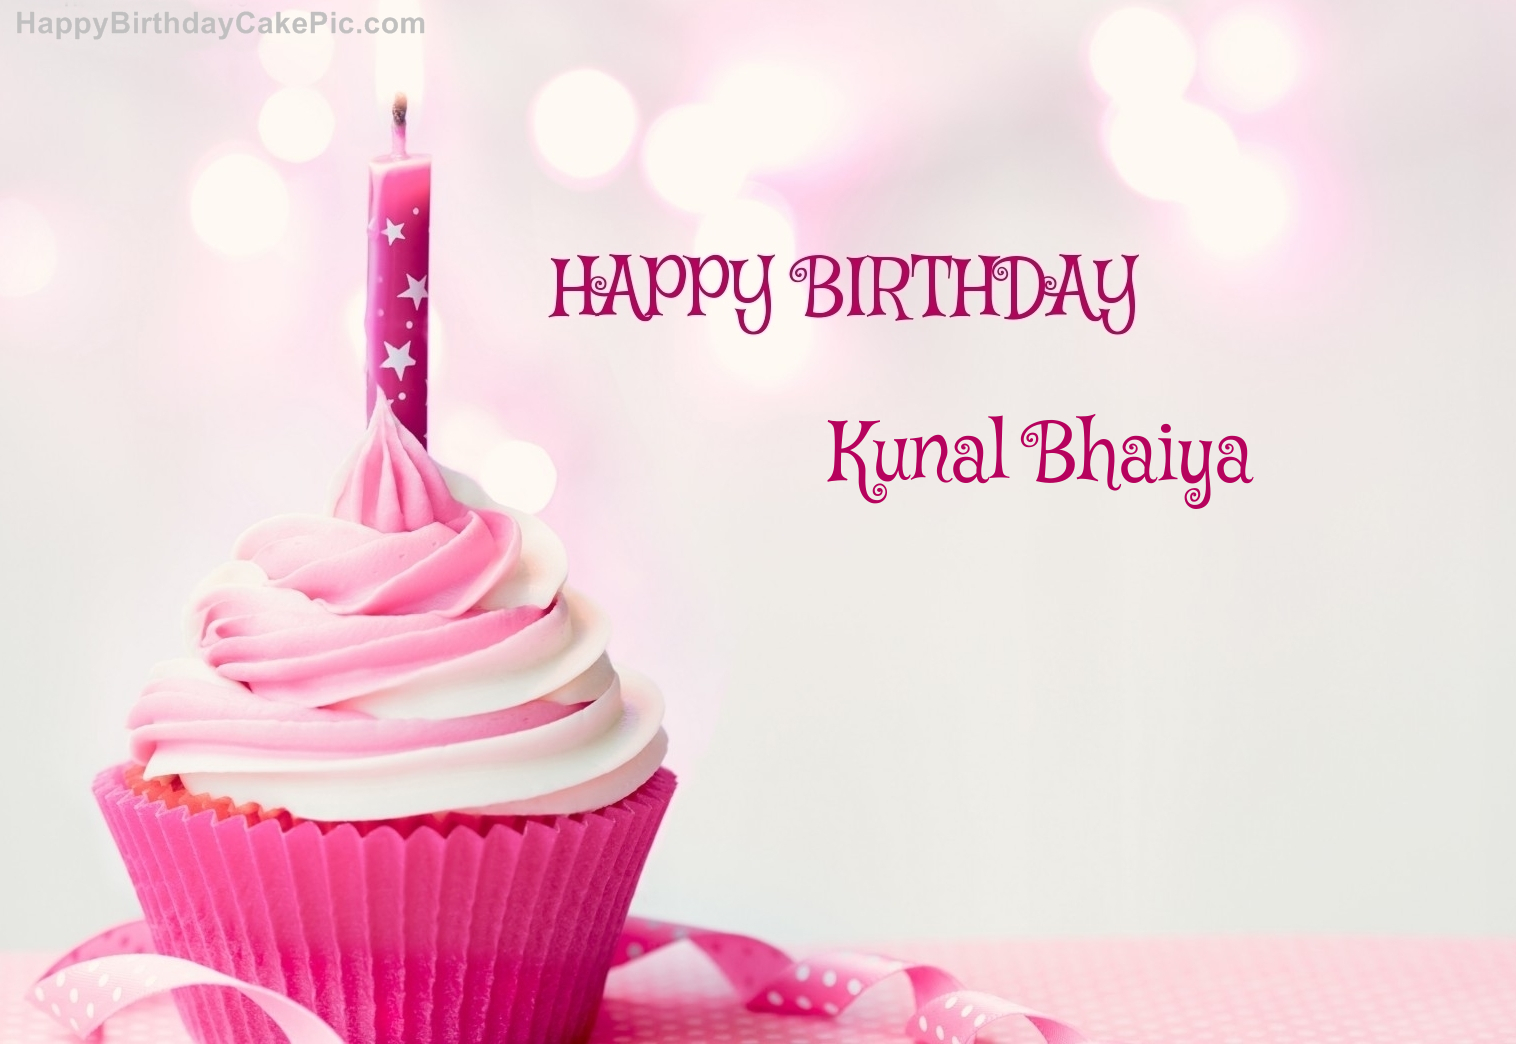 ️ Happy Birthday Cupcake Candle Pink Cake For Kunal Bhaiya